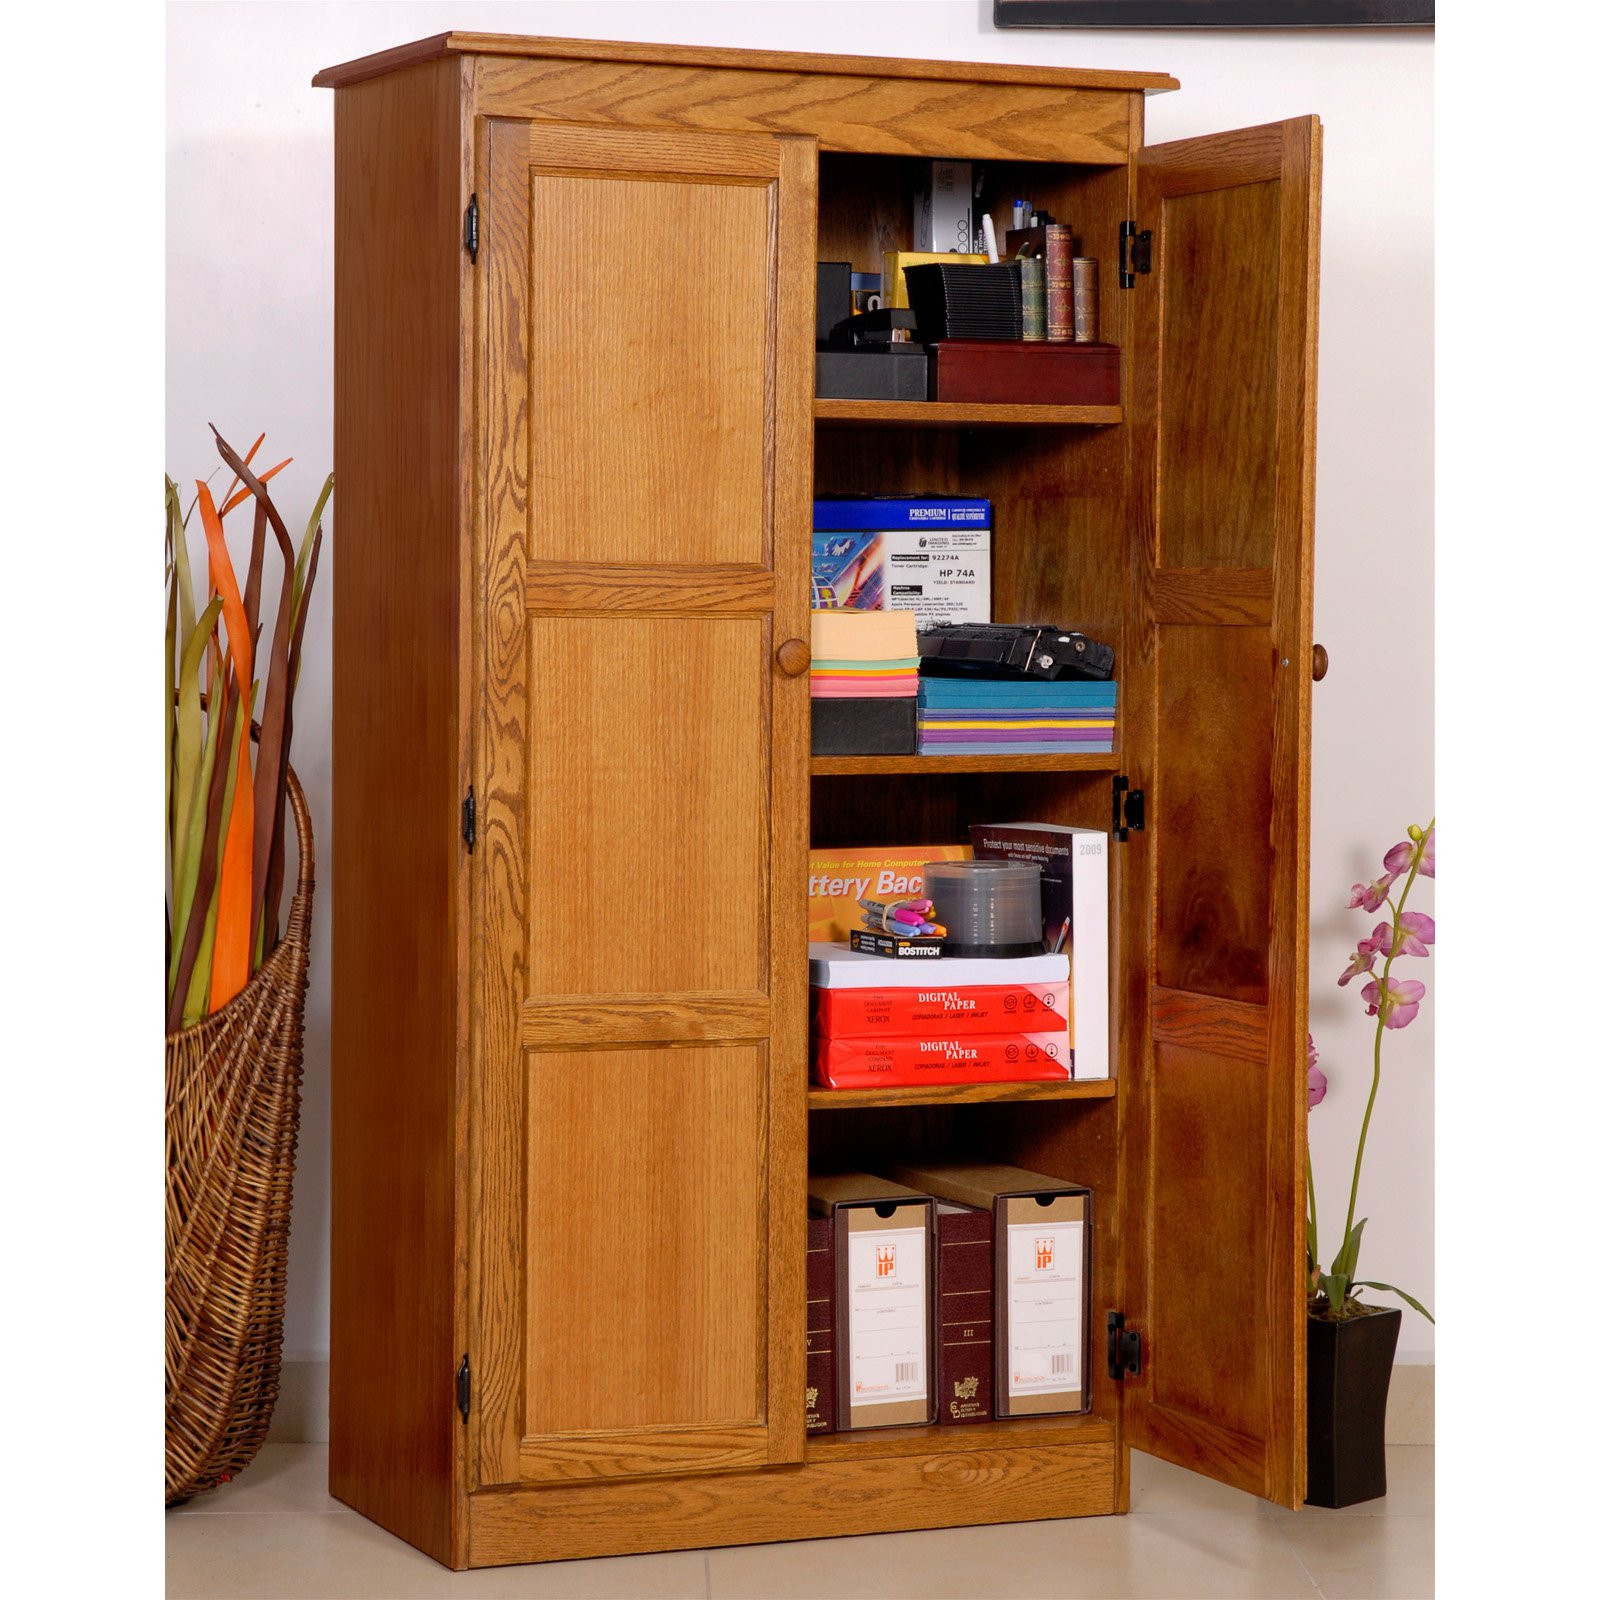 Kitchen Storage Closet
 Concepts in Wood Dry Oak KT613A Storage Utility Closet